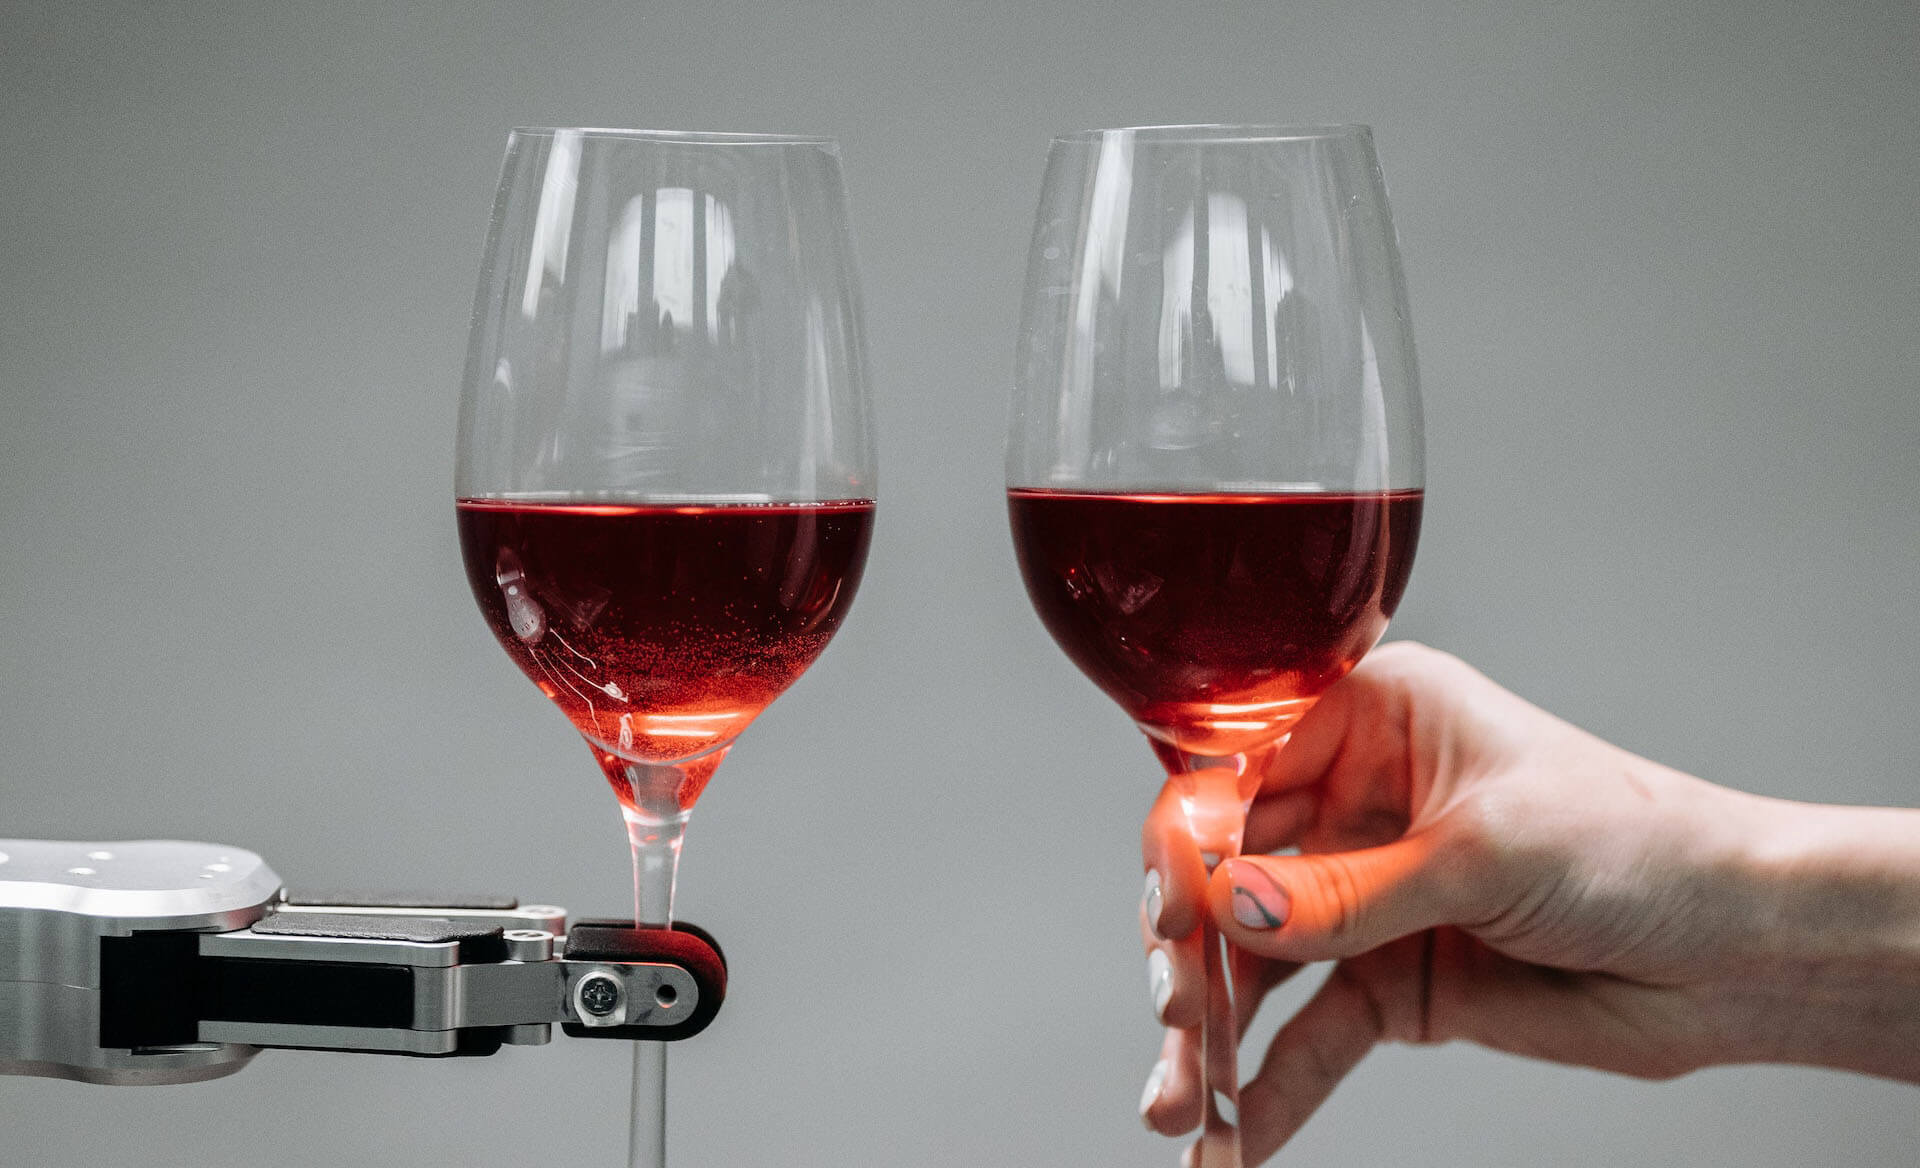 A Robot Holding a Wine